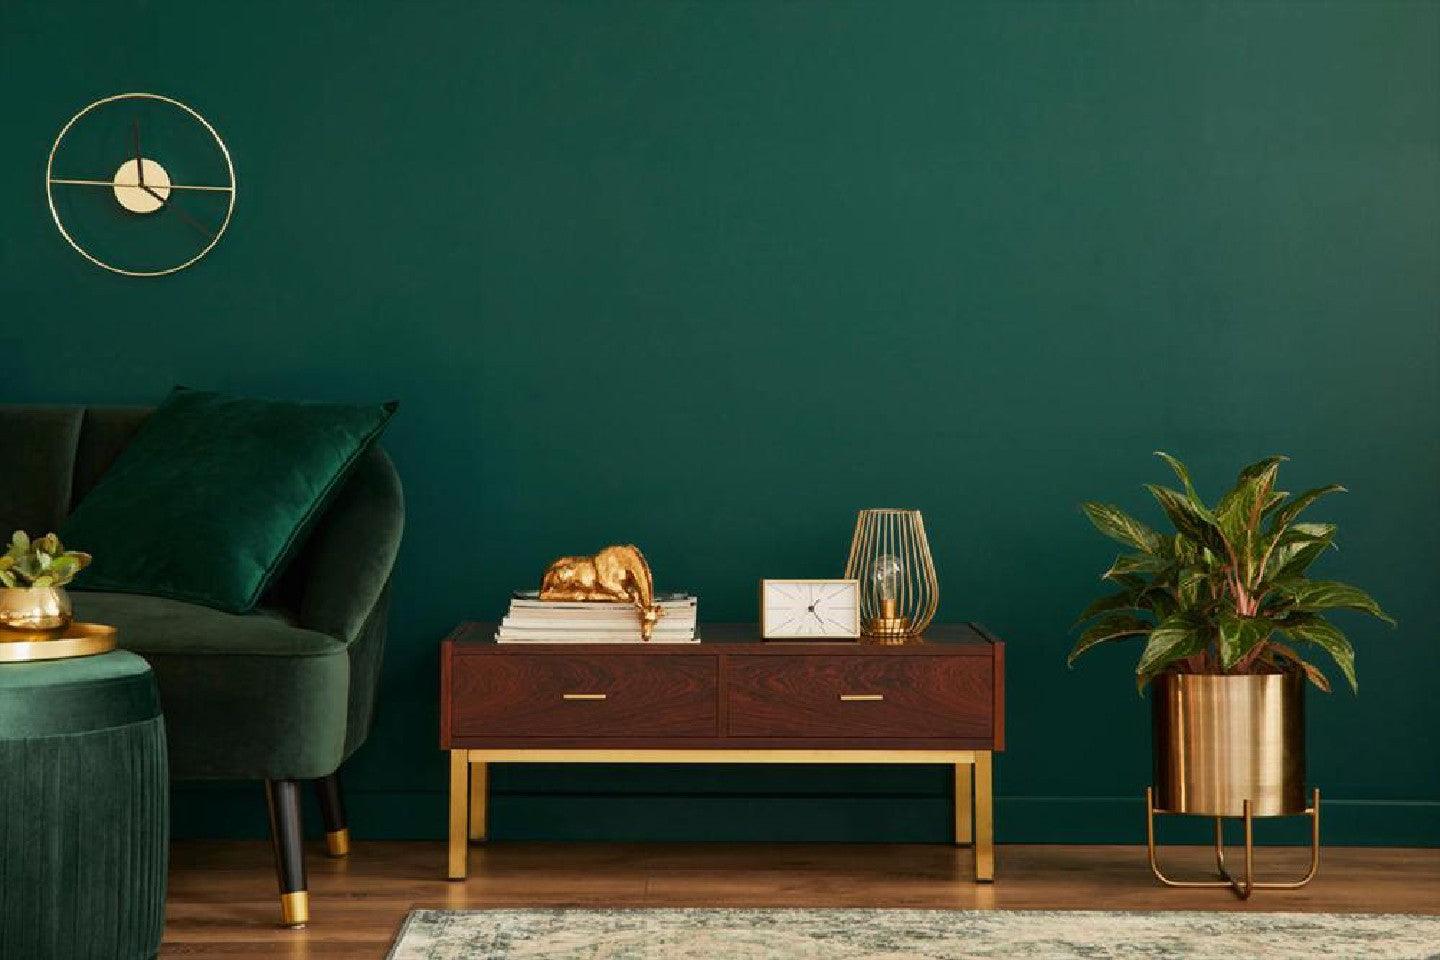 green furniture